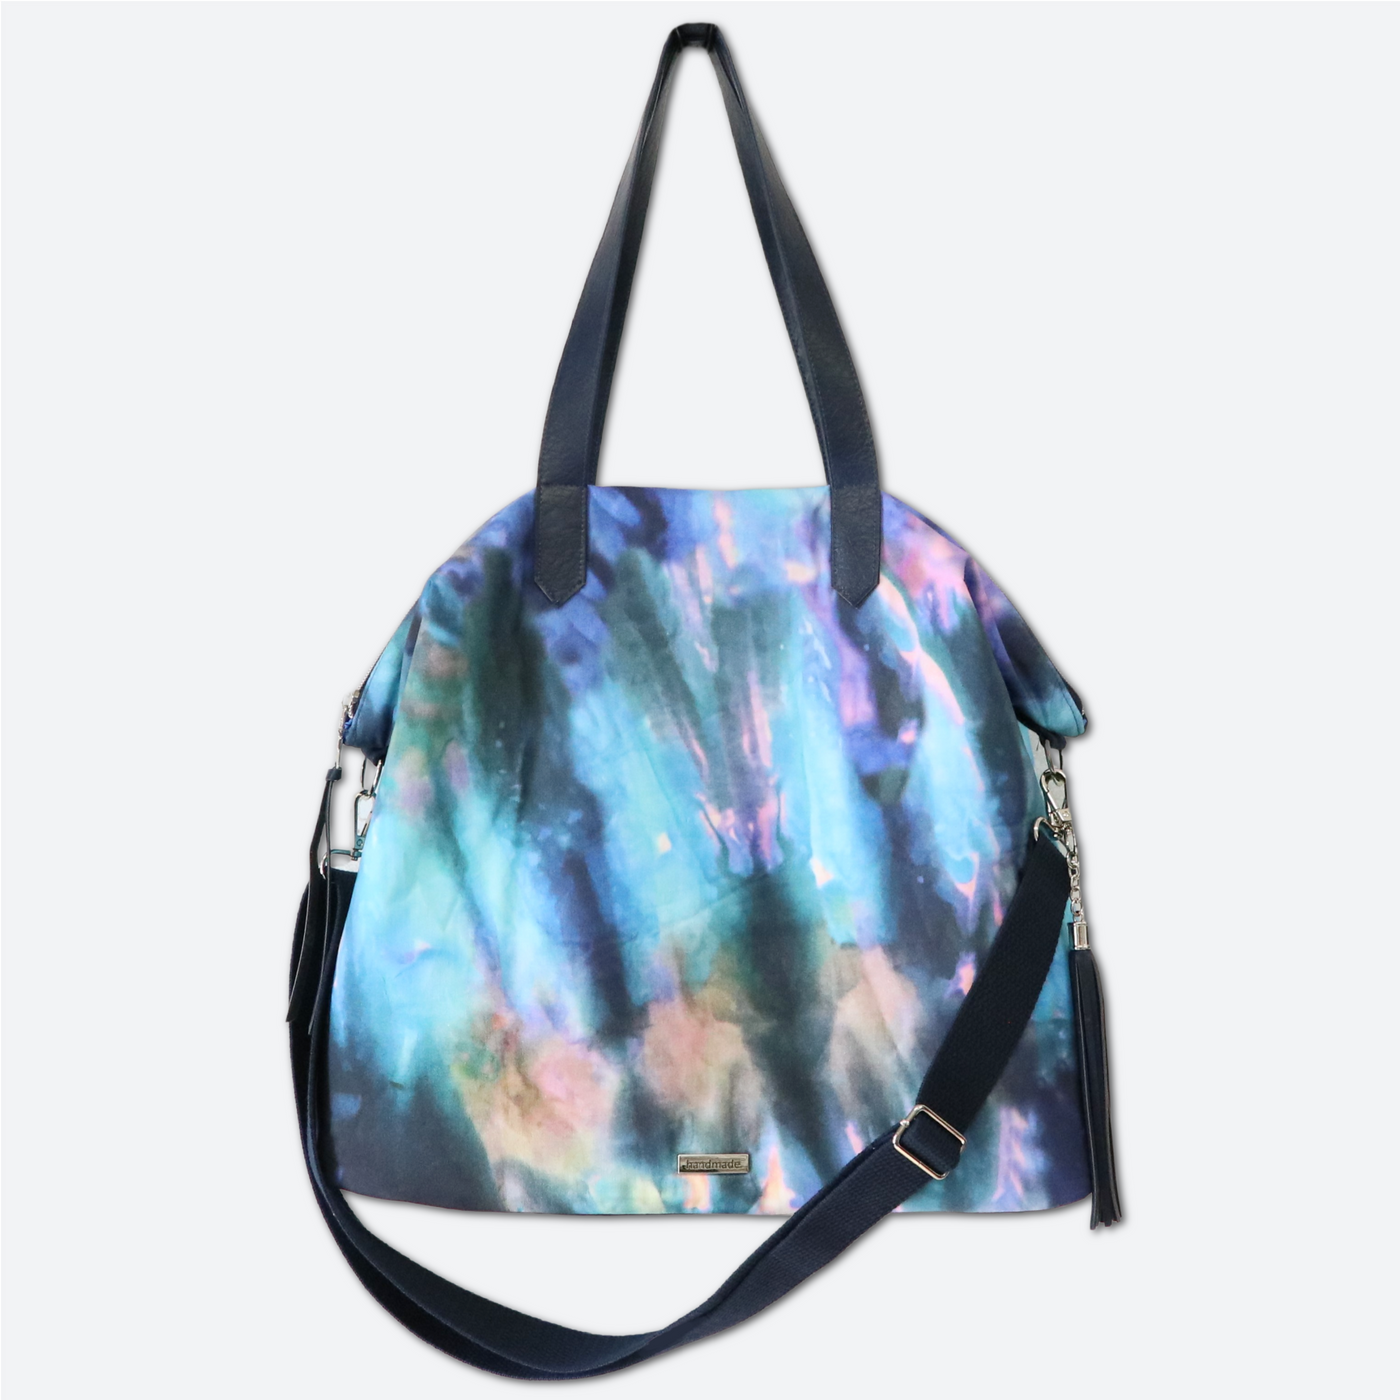 Aurora Bag